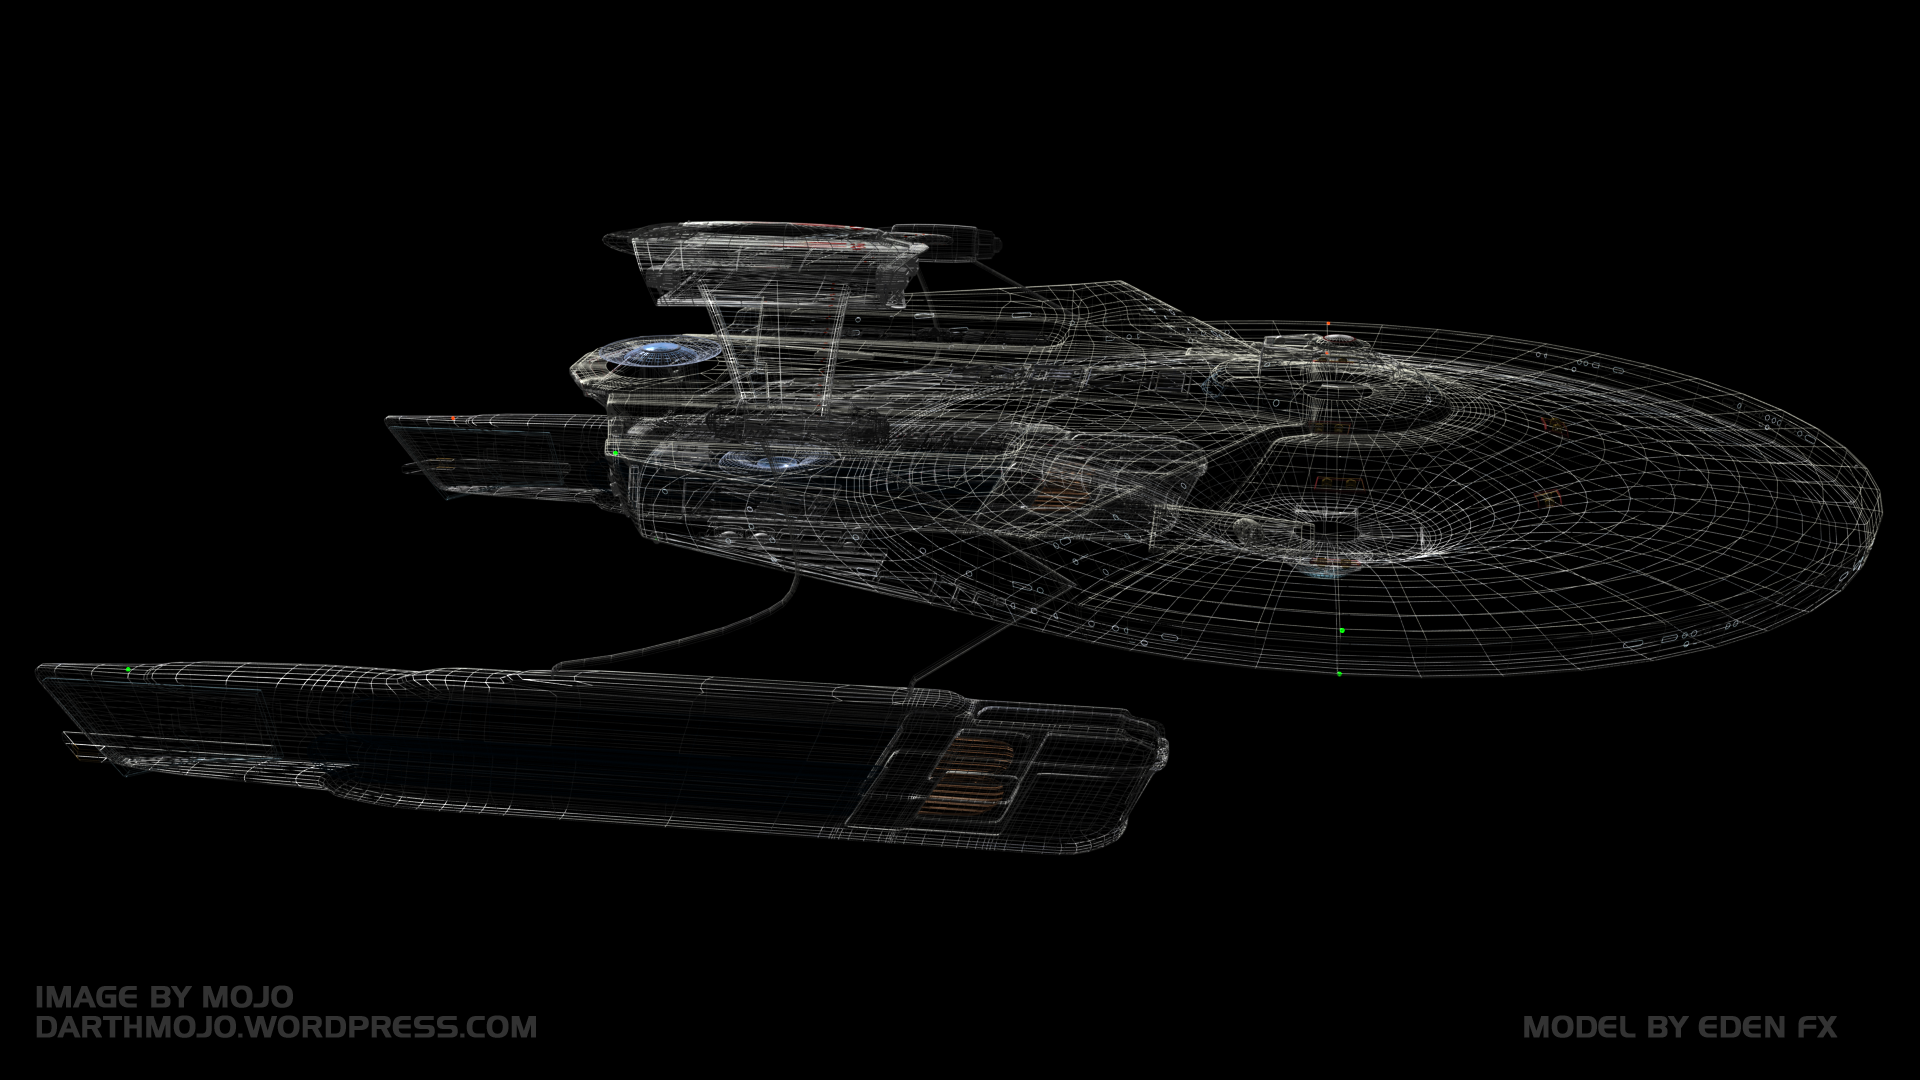 General 1920x1080 movies Star Trek Star Trek Ships Star Trek: TOS digital art CGI simple background black background vehicle